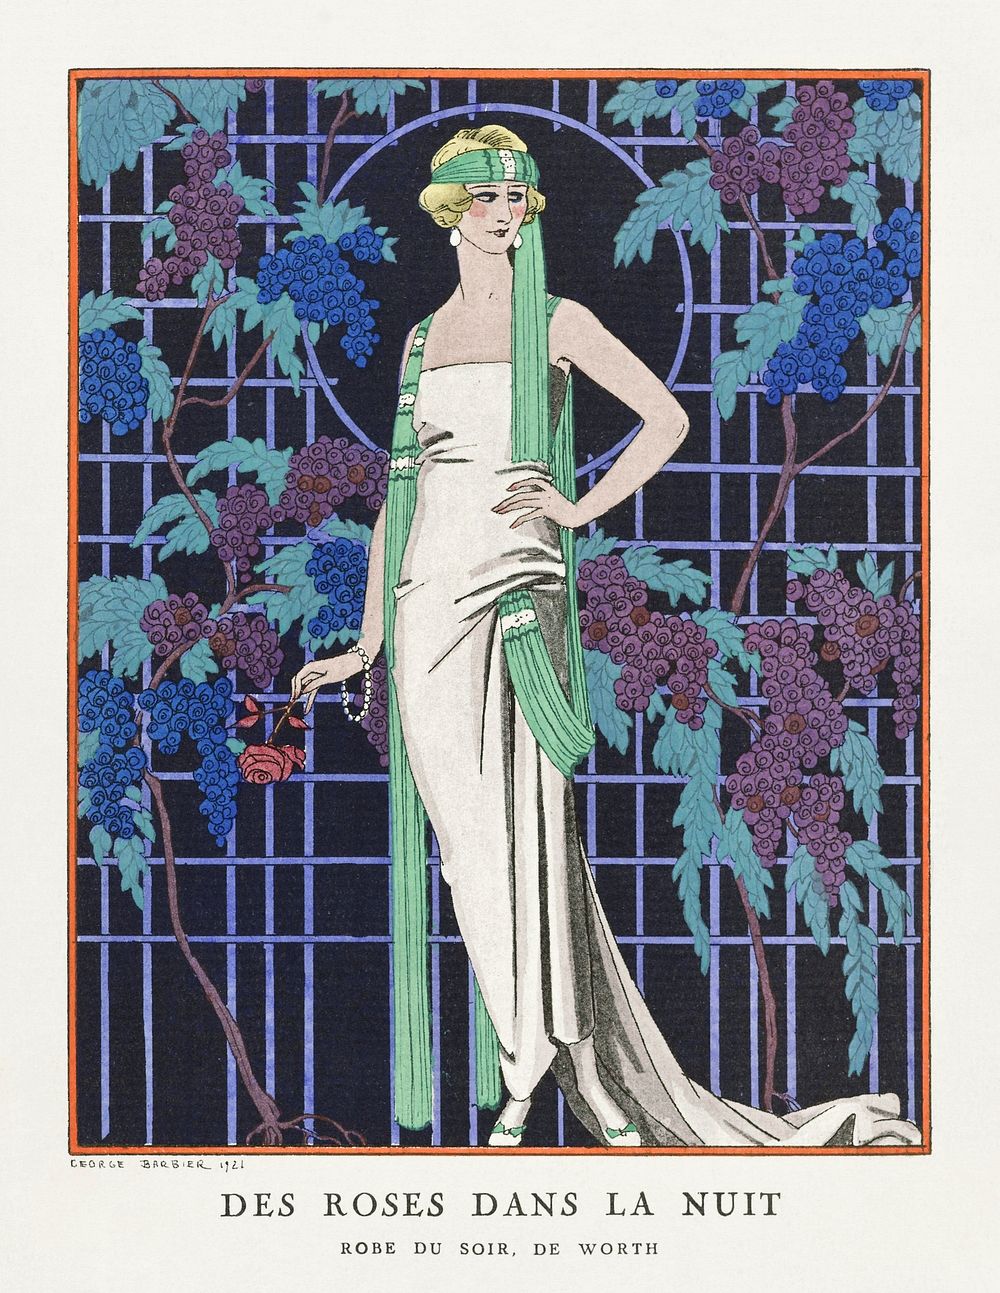 Des robes dans la nuit: Robe du soir, de Worth (1921) fashion illustration in high resolution by George Barbier. Original…